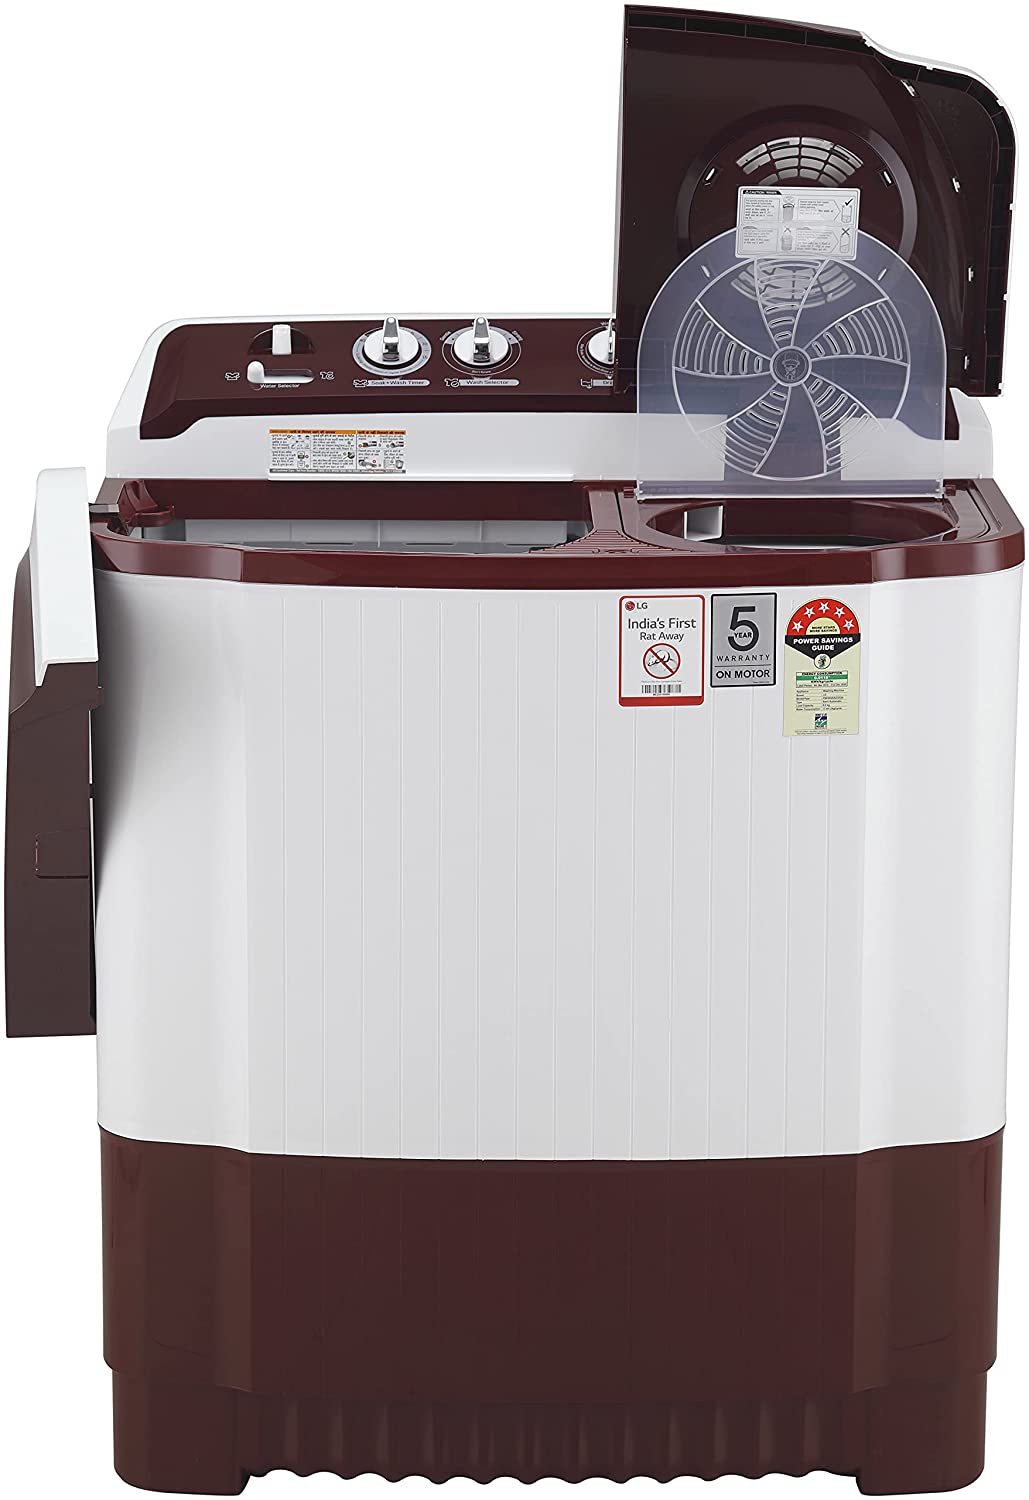 LG Washing Machine 8kg 5 Star Semi-Automatic